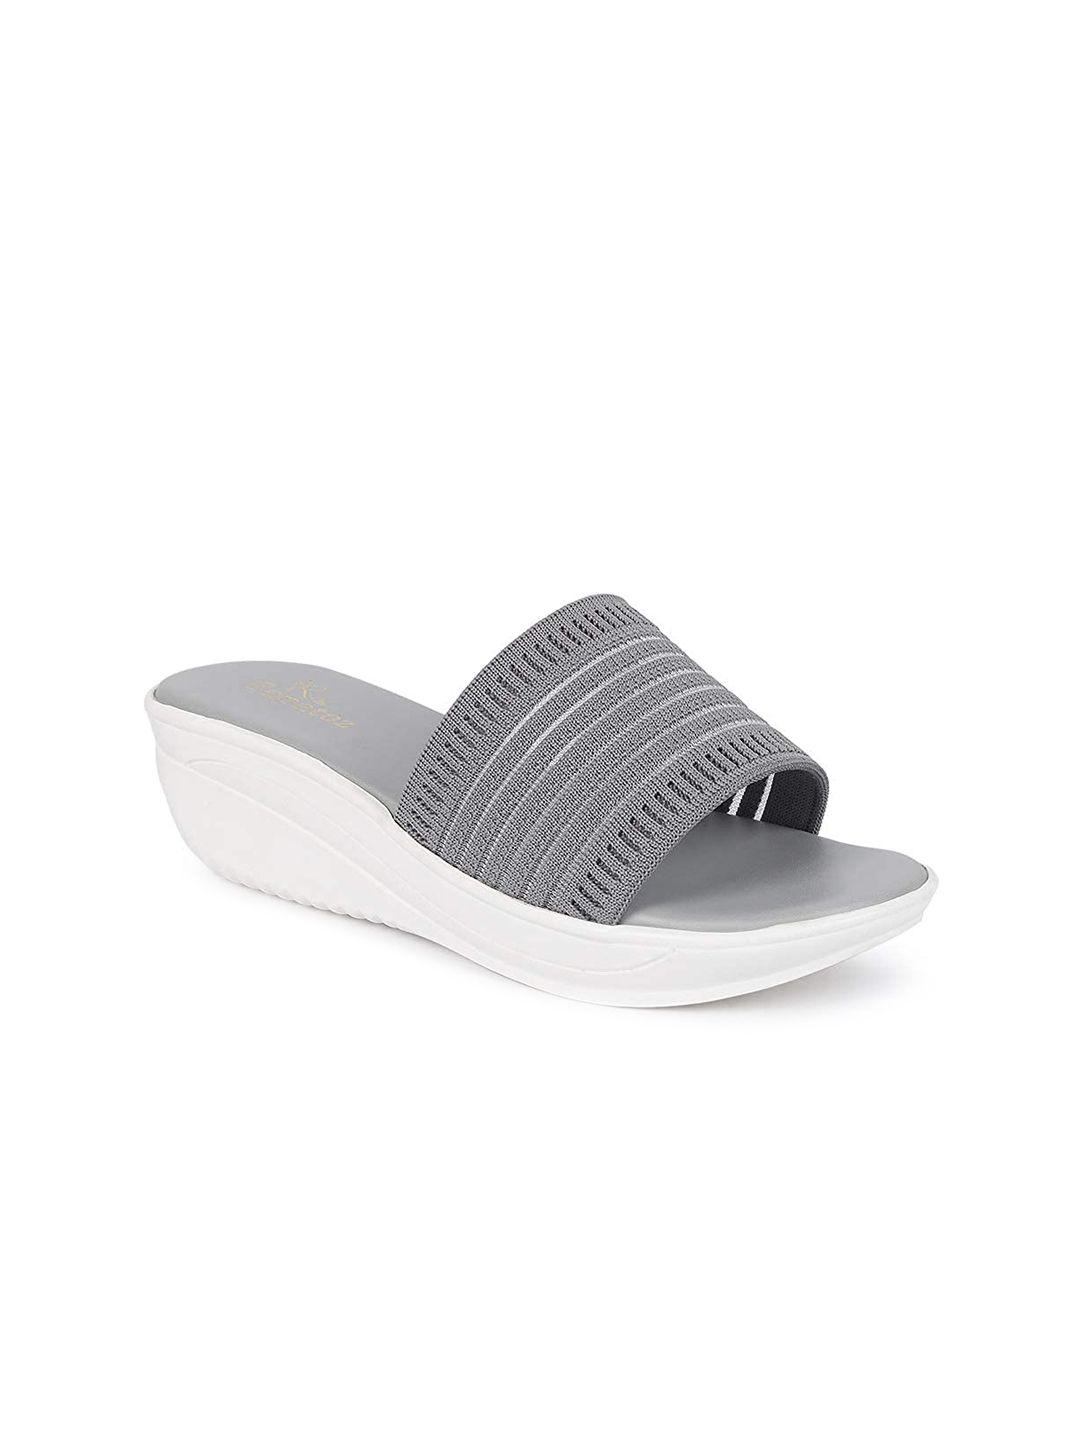 zapatoz girls grey & white pu flatform heels sandals